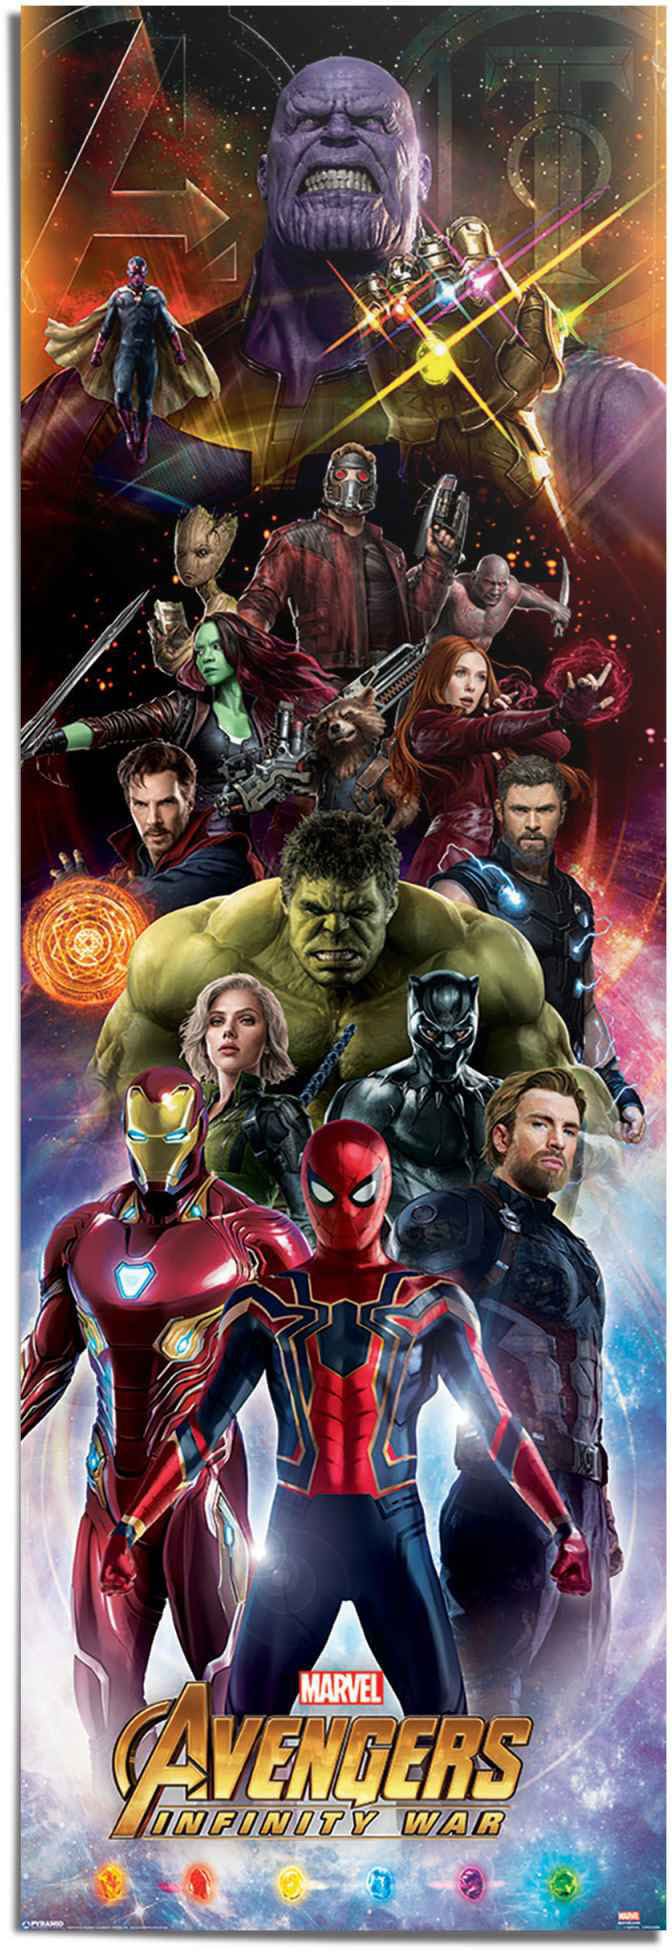 kaufen »Avengers St.) auf Poster Charaktere«, Reinders! (1 Raten